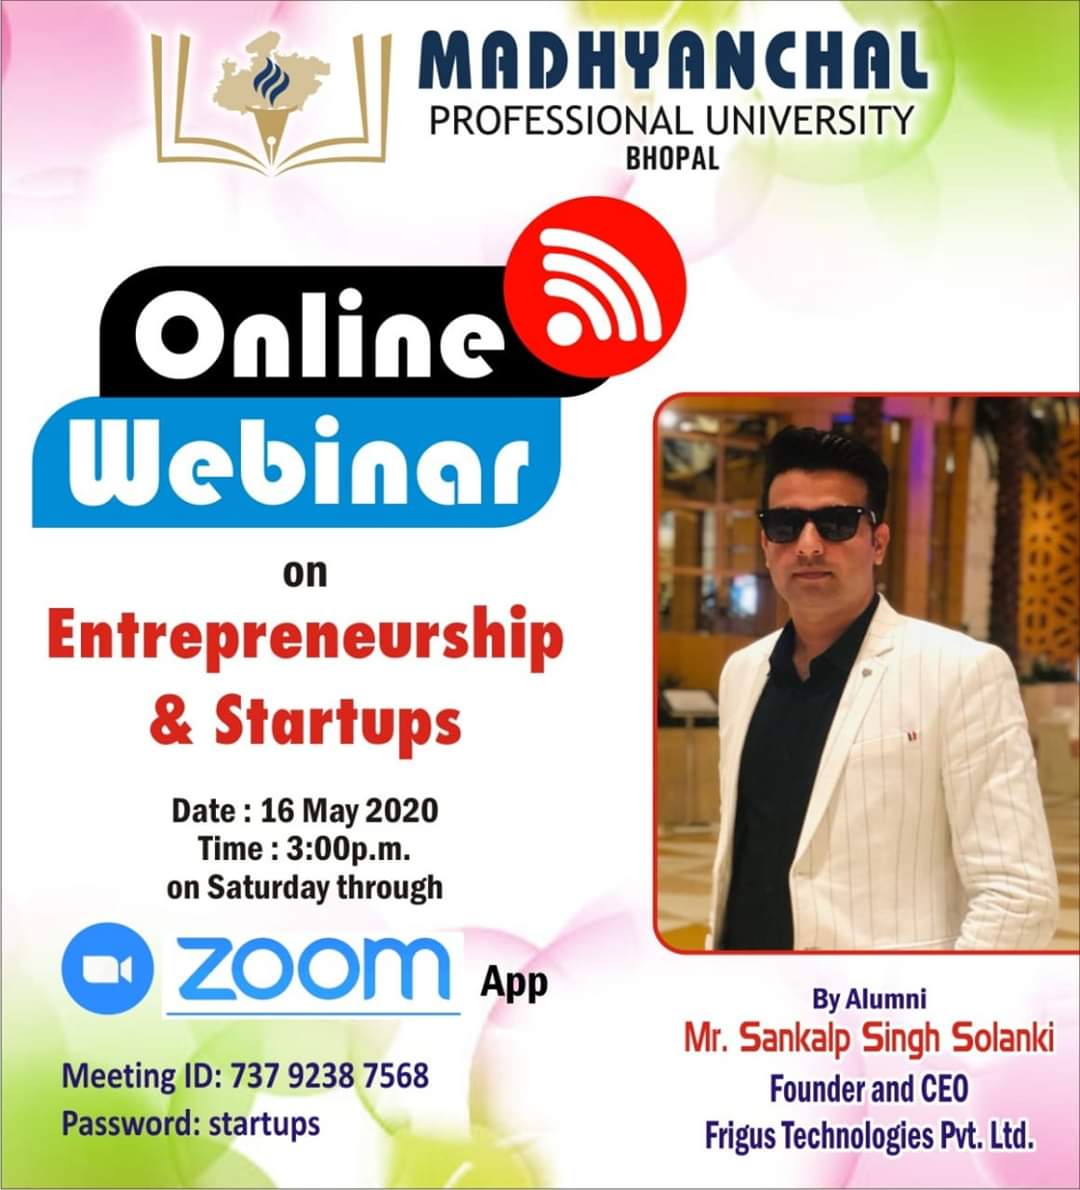 Online Webinar on Entrepreneurship and Startup by Alumni Mr. Sankalp Singh Solanki Founder and CEO Frigus Technologies Pvt. Ltd. 